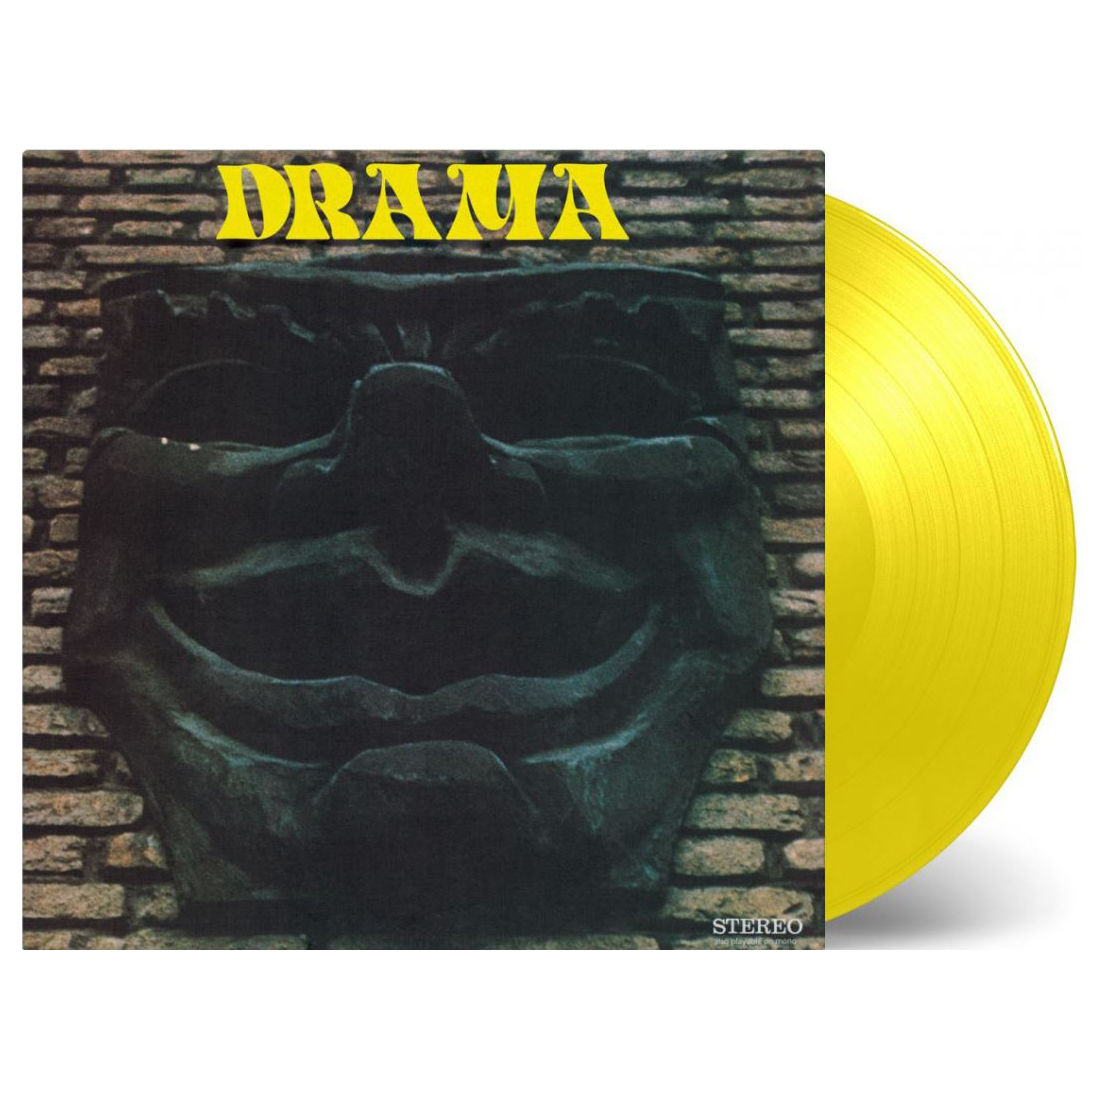 Drama: Limited Yellow Vinyl LP